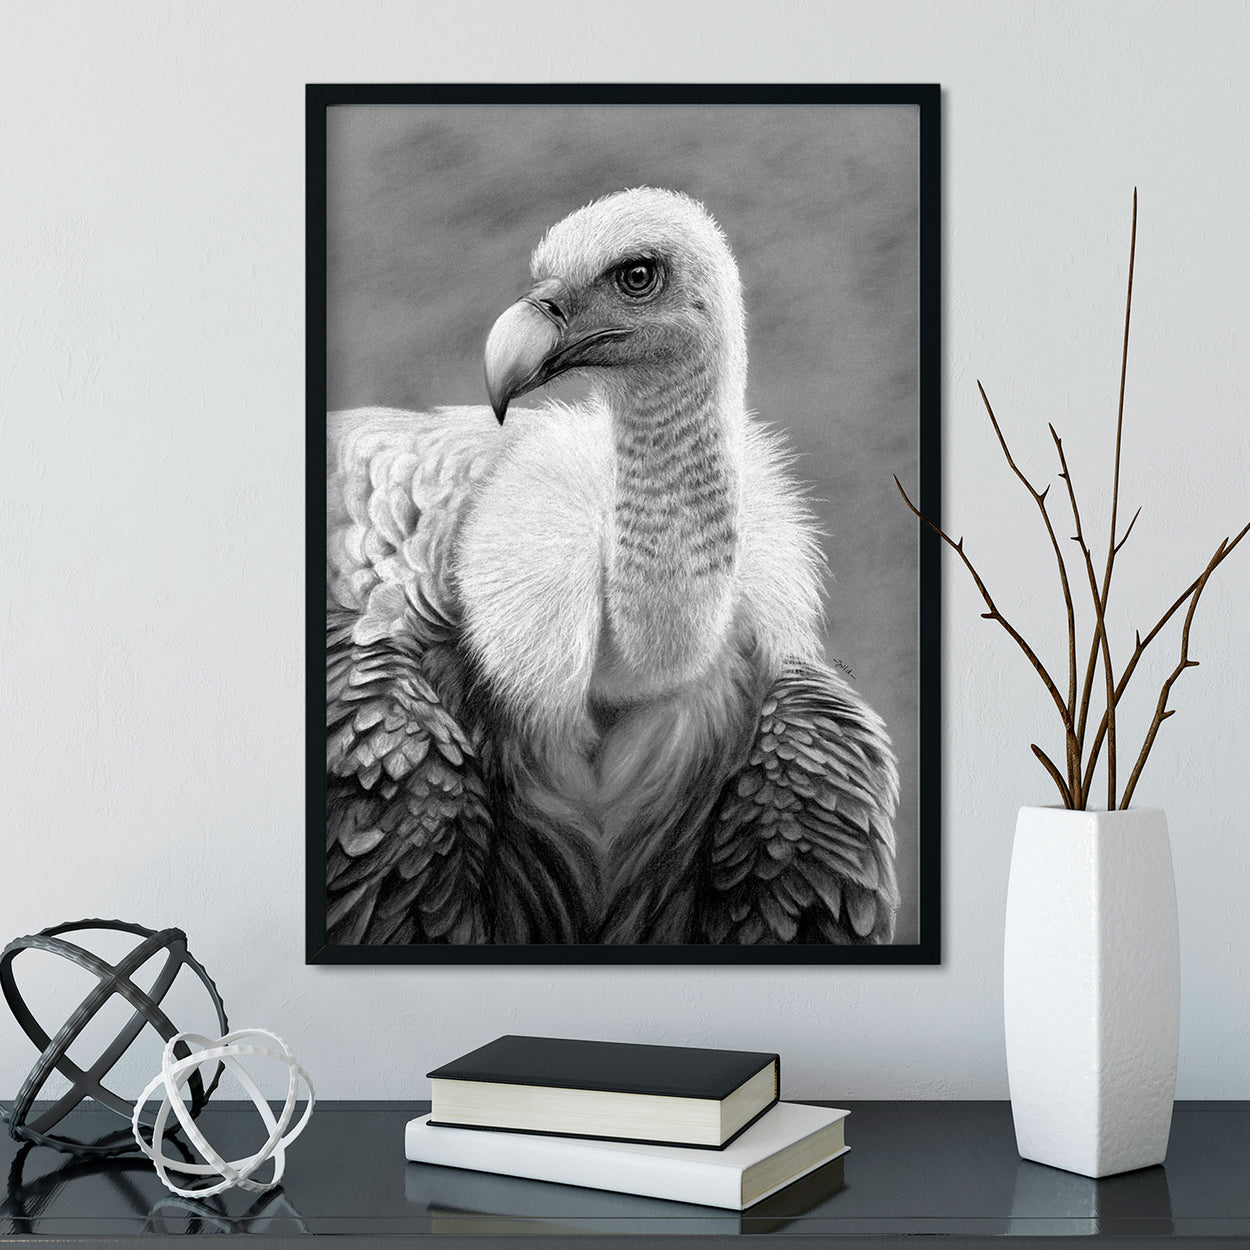 Griffon Vulture Print on Wall - The Thriving Wild - Jill Dimond